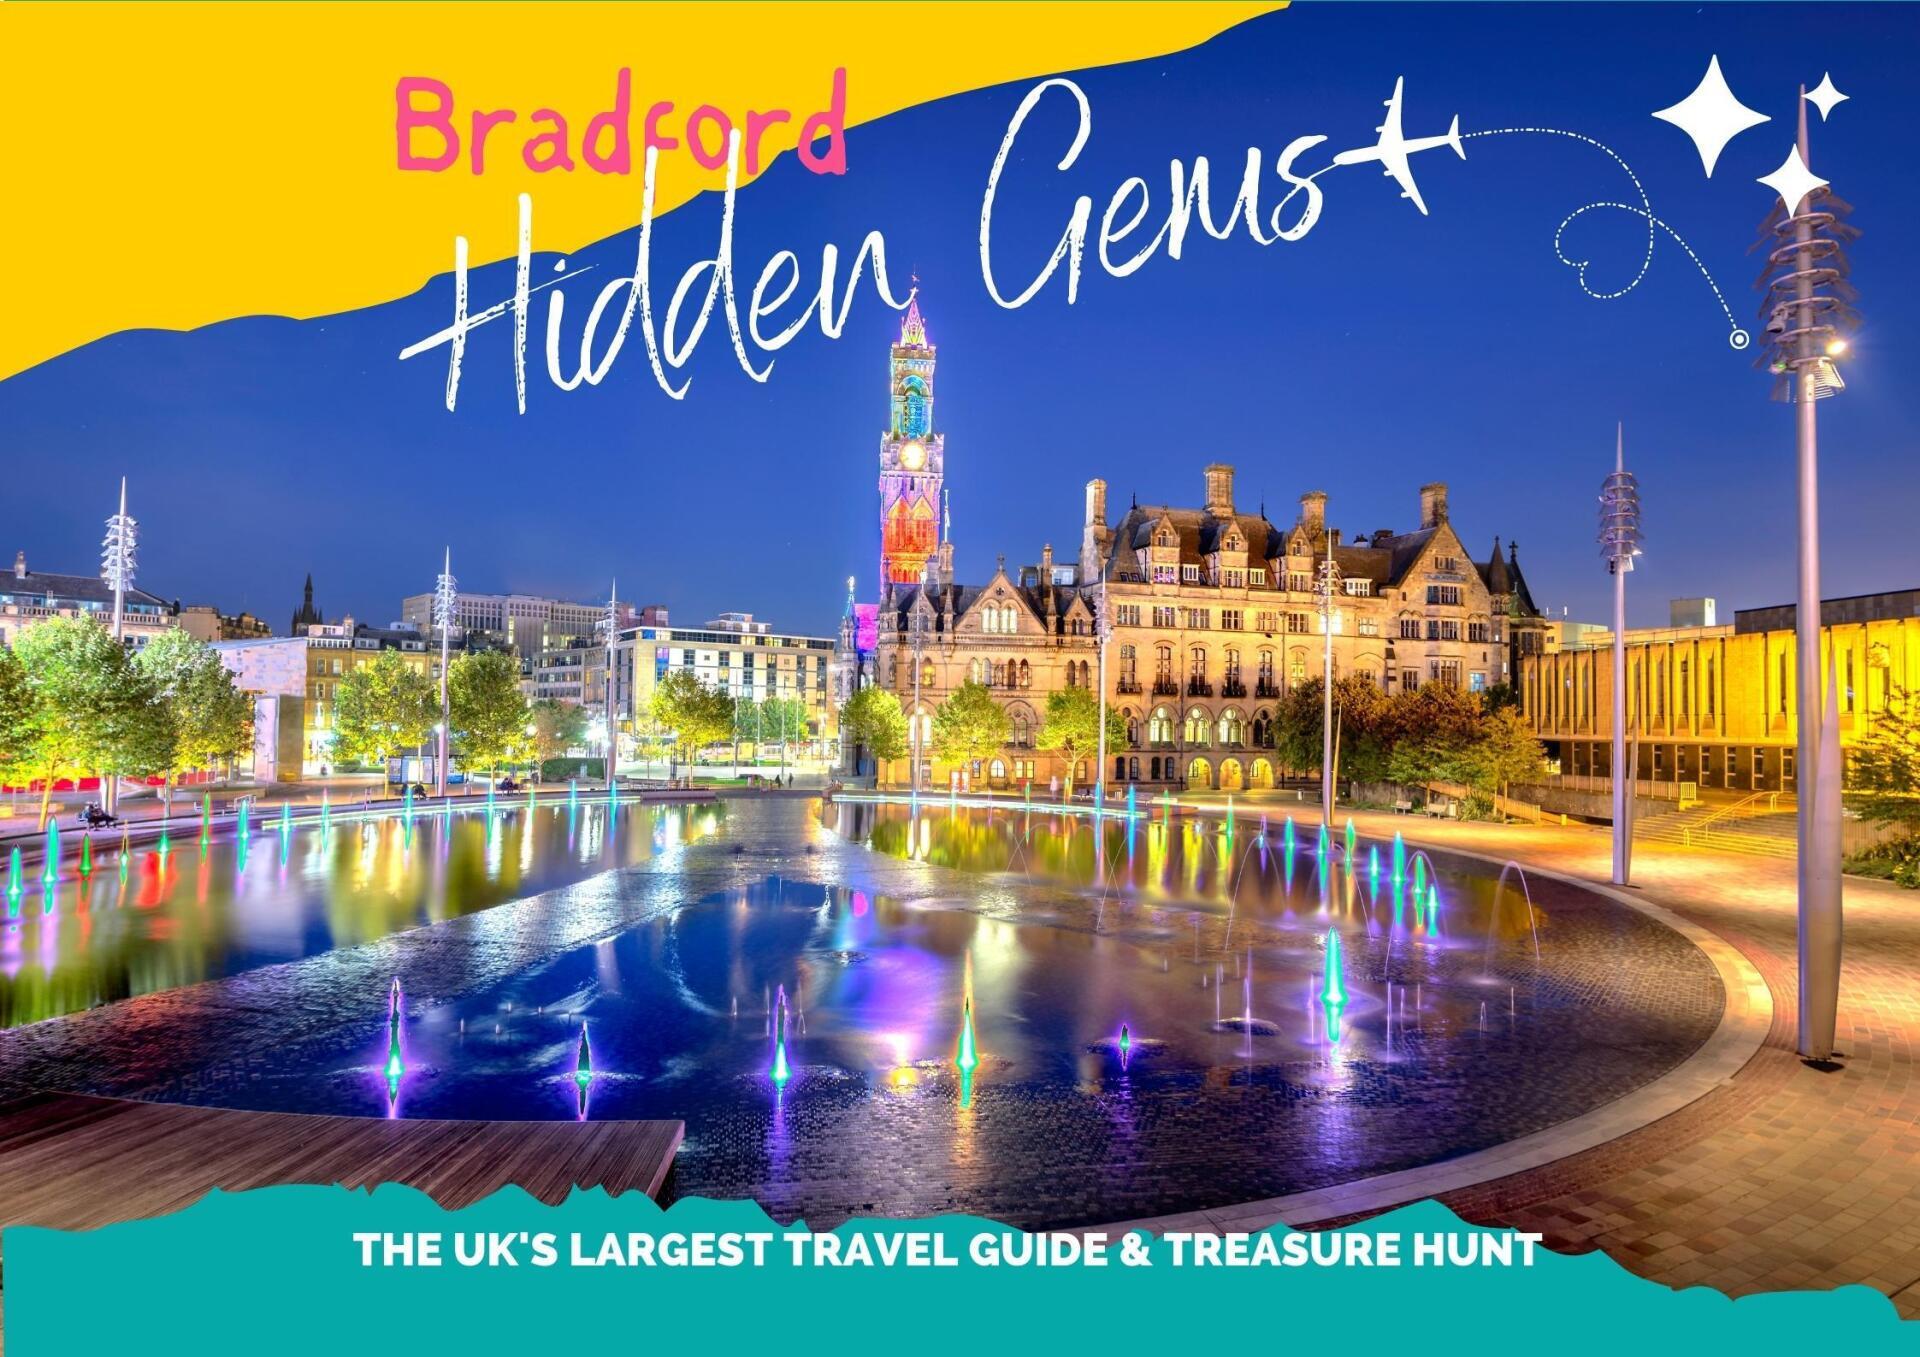 Bradford Hidden Gems